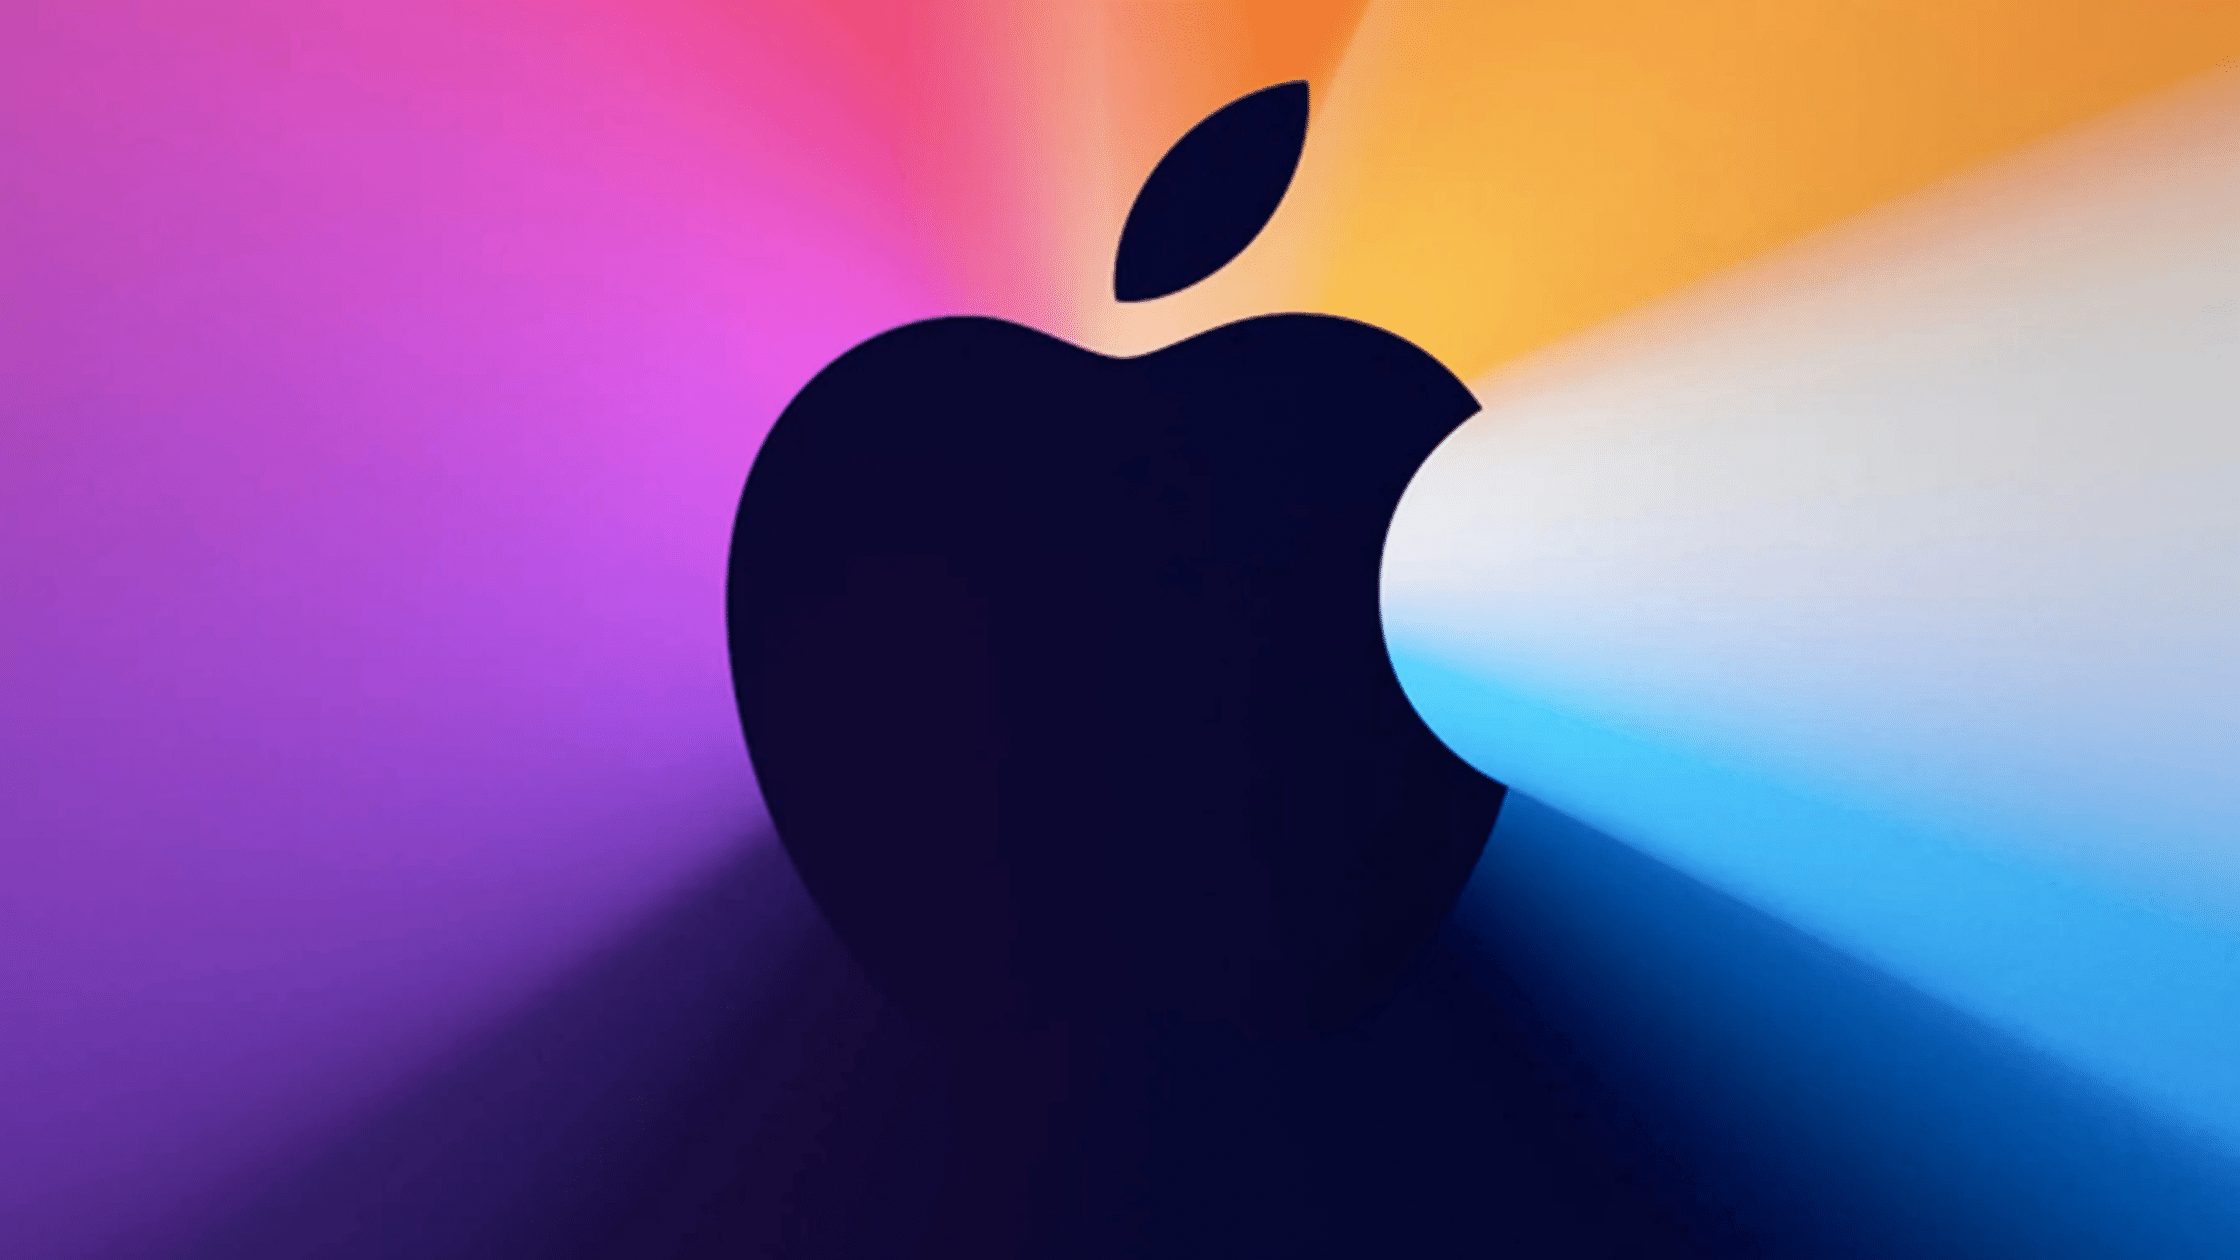 apple-event-2021-saudiscoop